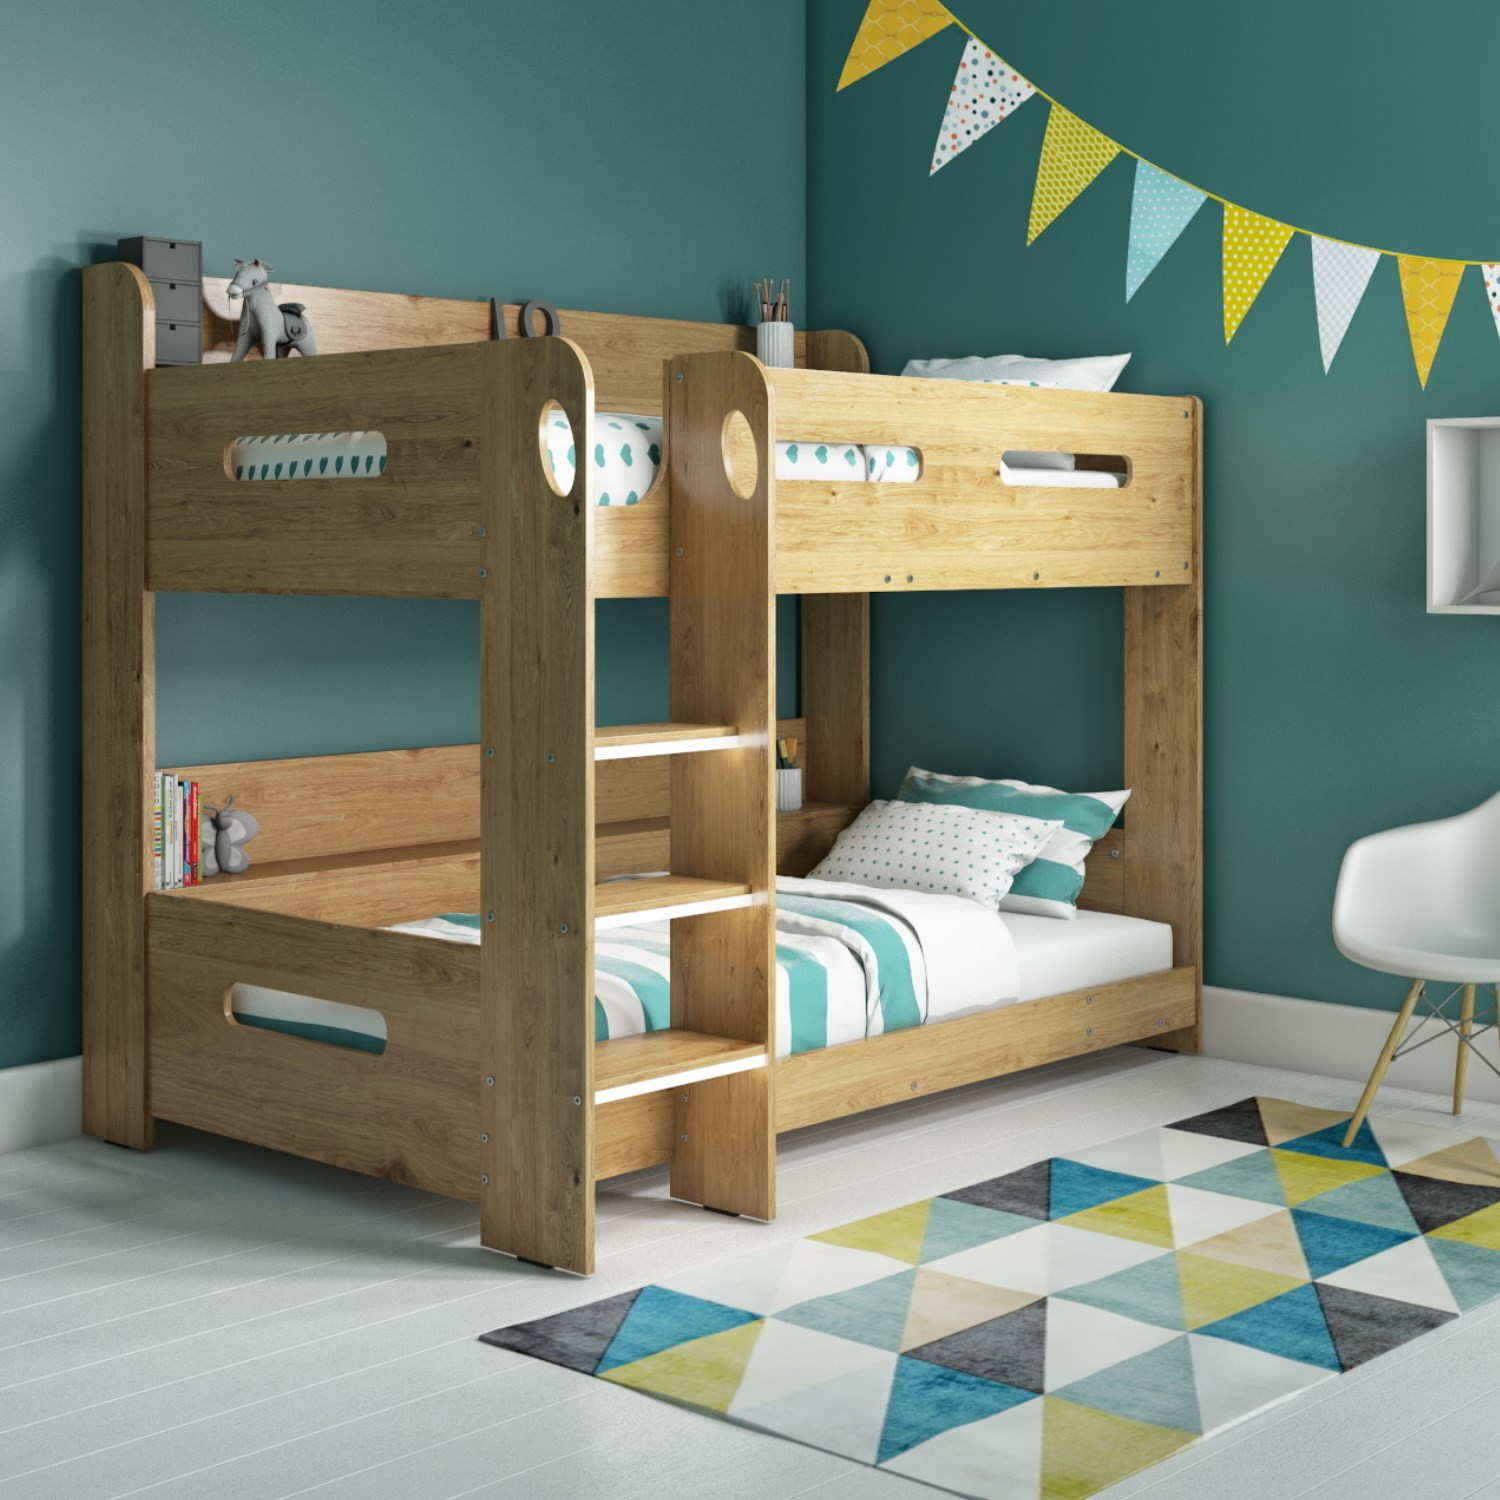 Childrens Bunk Bed With Storage
 Modern Kids Oak Bunk Bed Storage Shelves